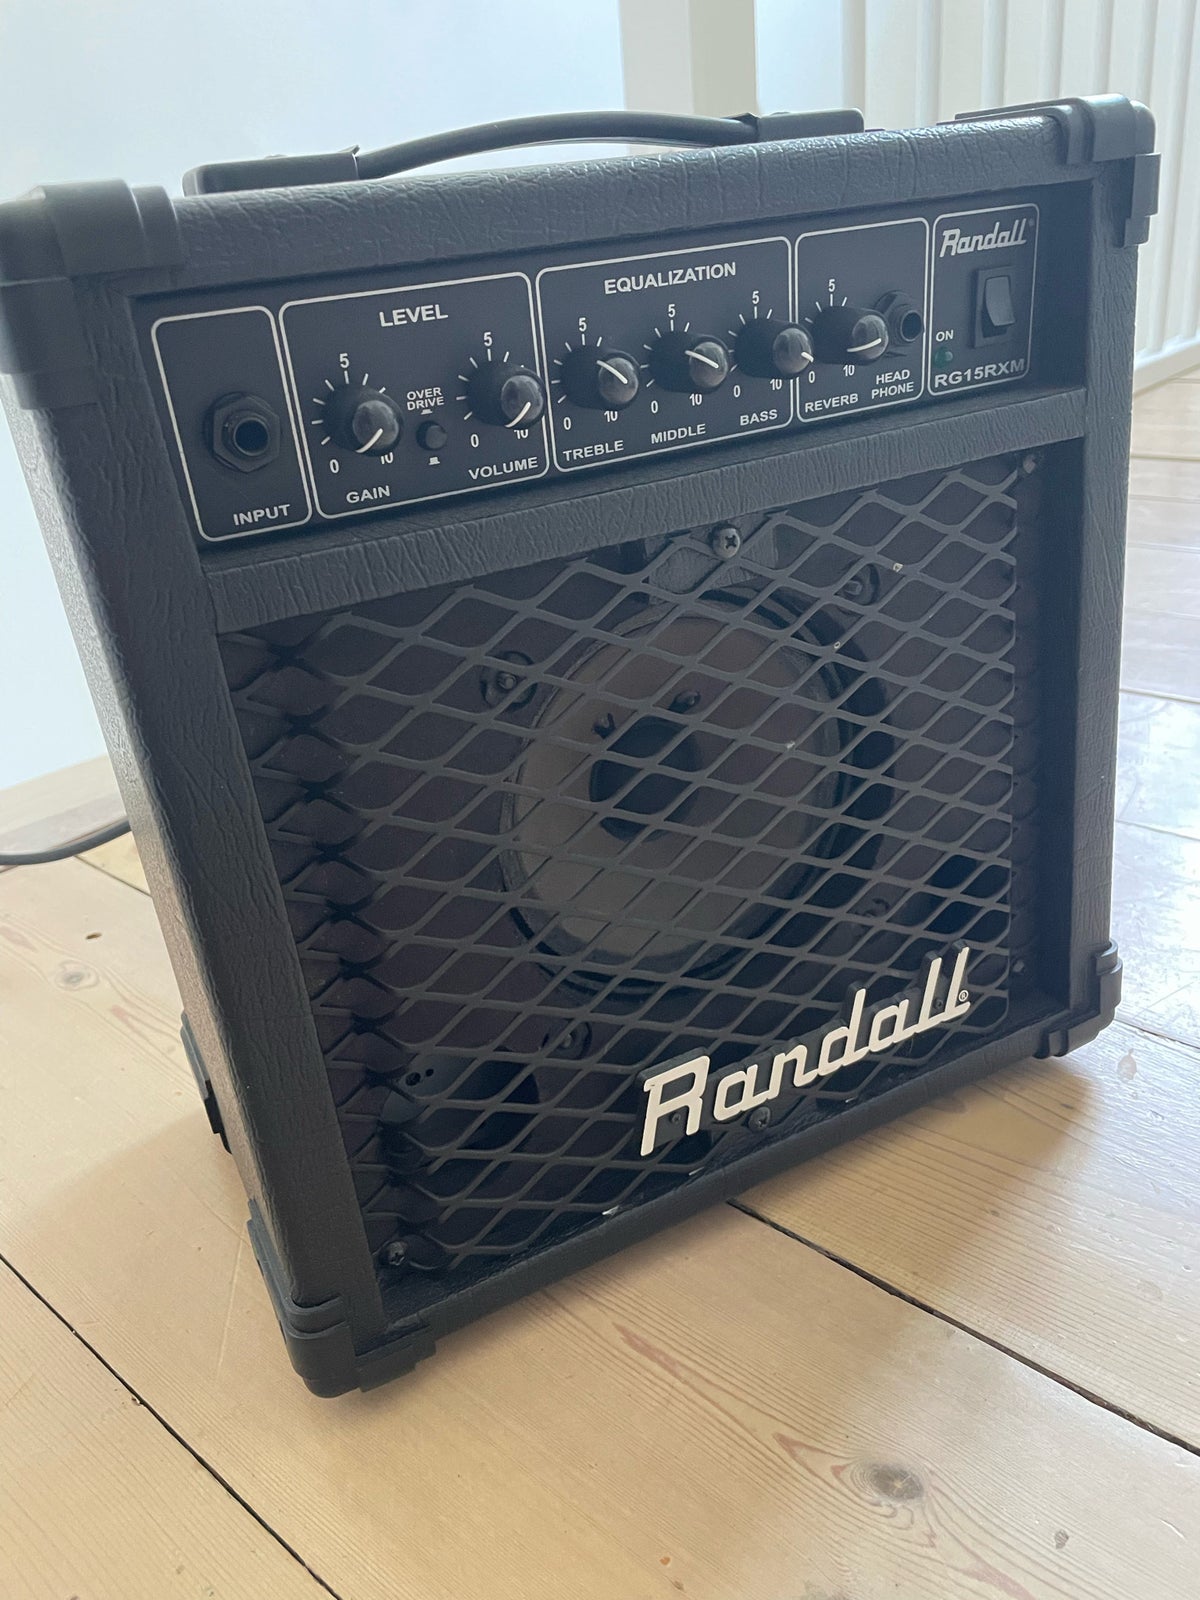 Guitarcombo, Randall Rg15rxm, 15 W